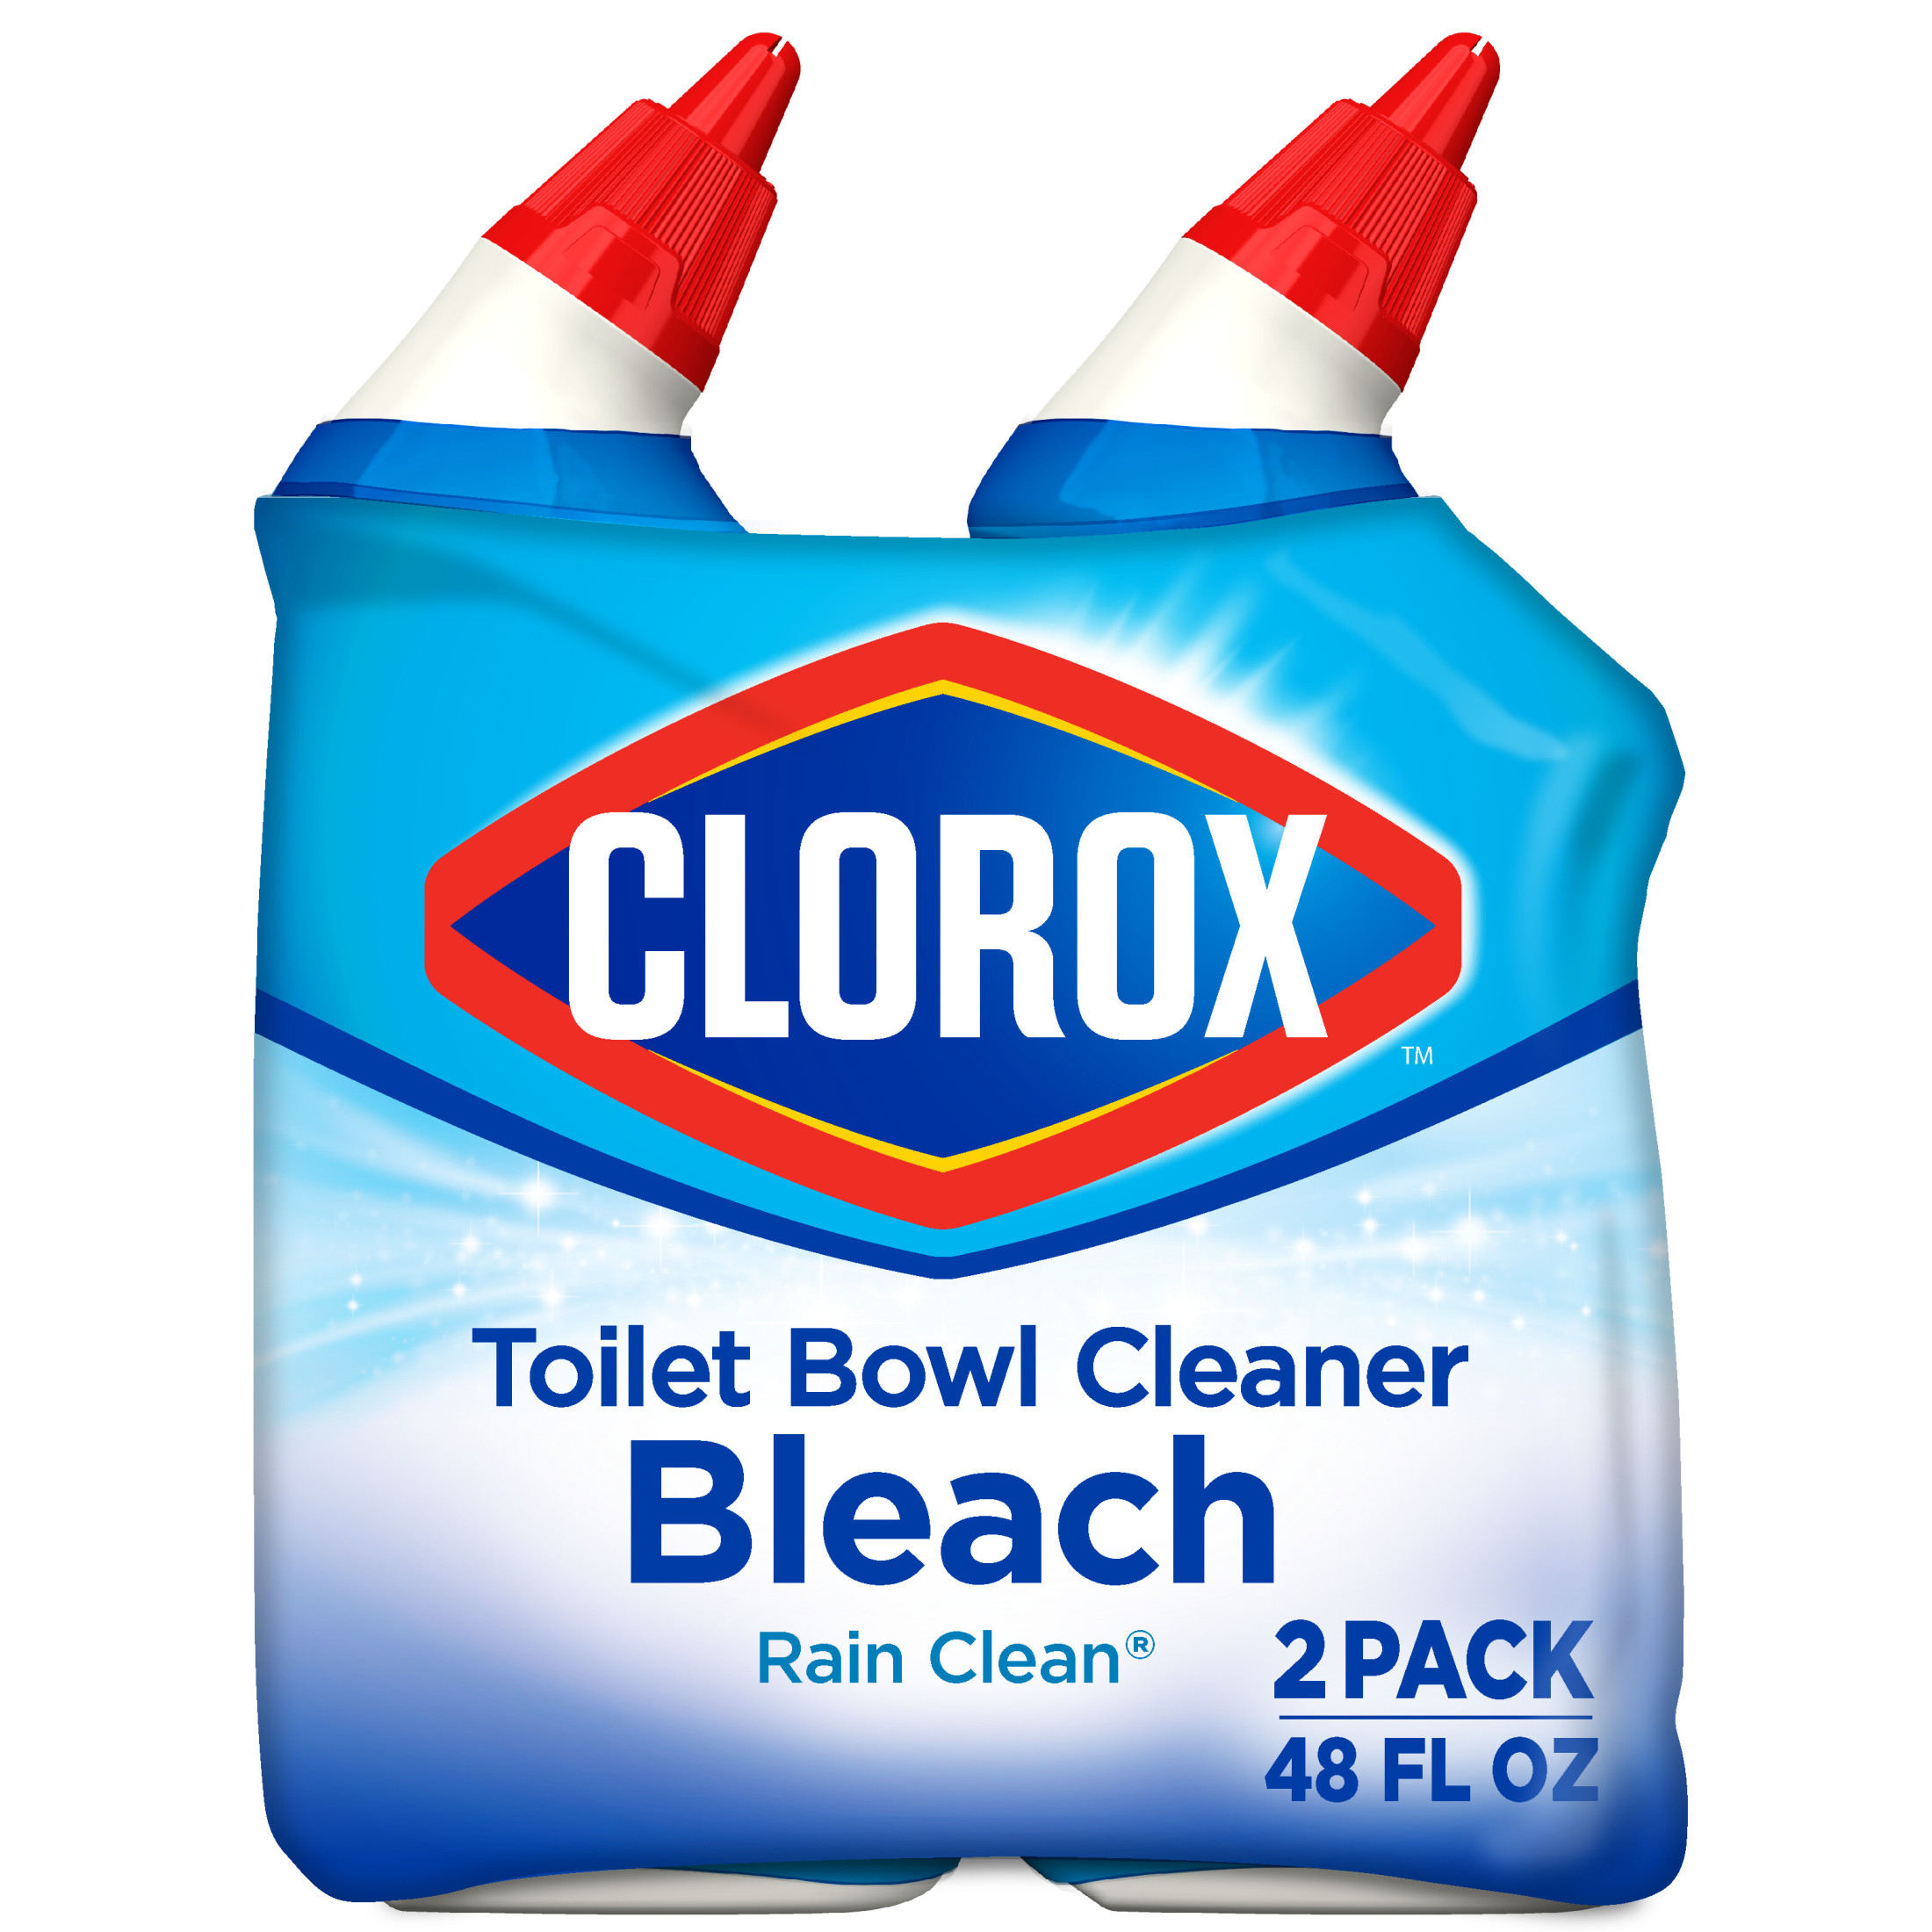 Clorox Toilet Bowl Cleaner Bleach, Rain Clean, 24 fl oz, 2 Pack - image 1 of 9